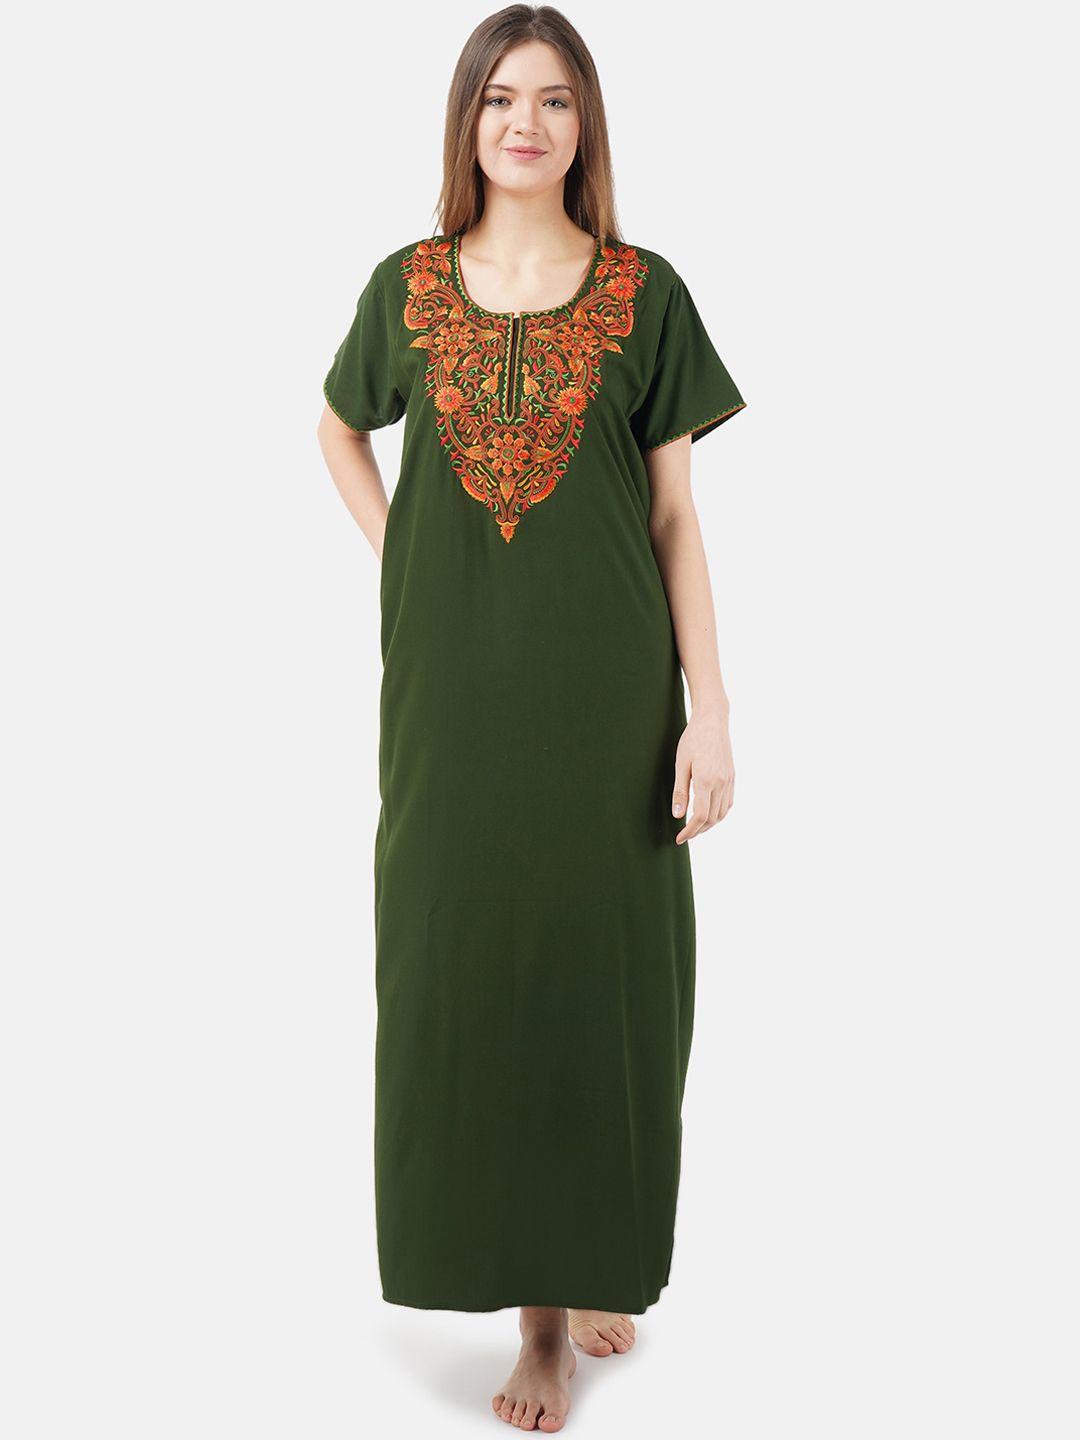 koi-sleepwear-olive-green-embroidered-lissybissy-cotton-nightdress